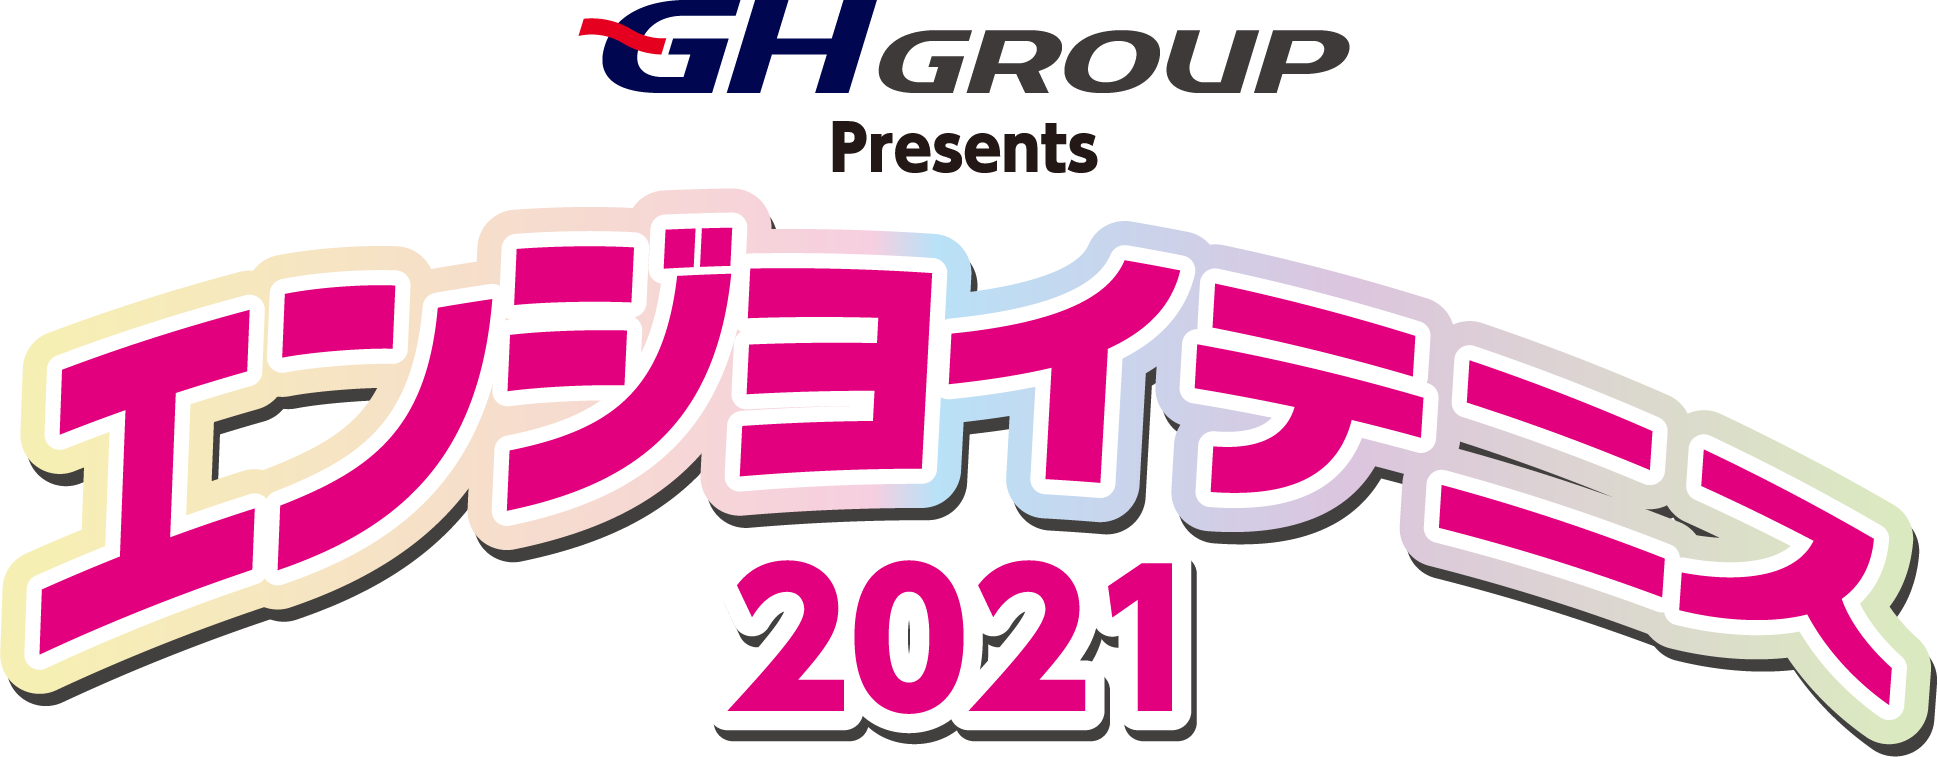 GH GROUP Presents エンジョイテニス2021